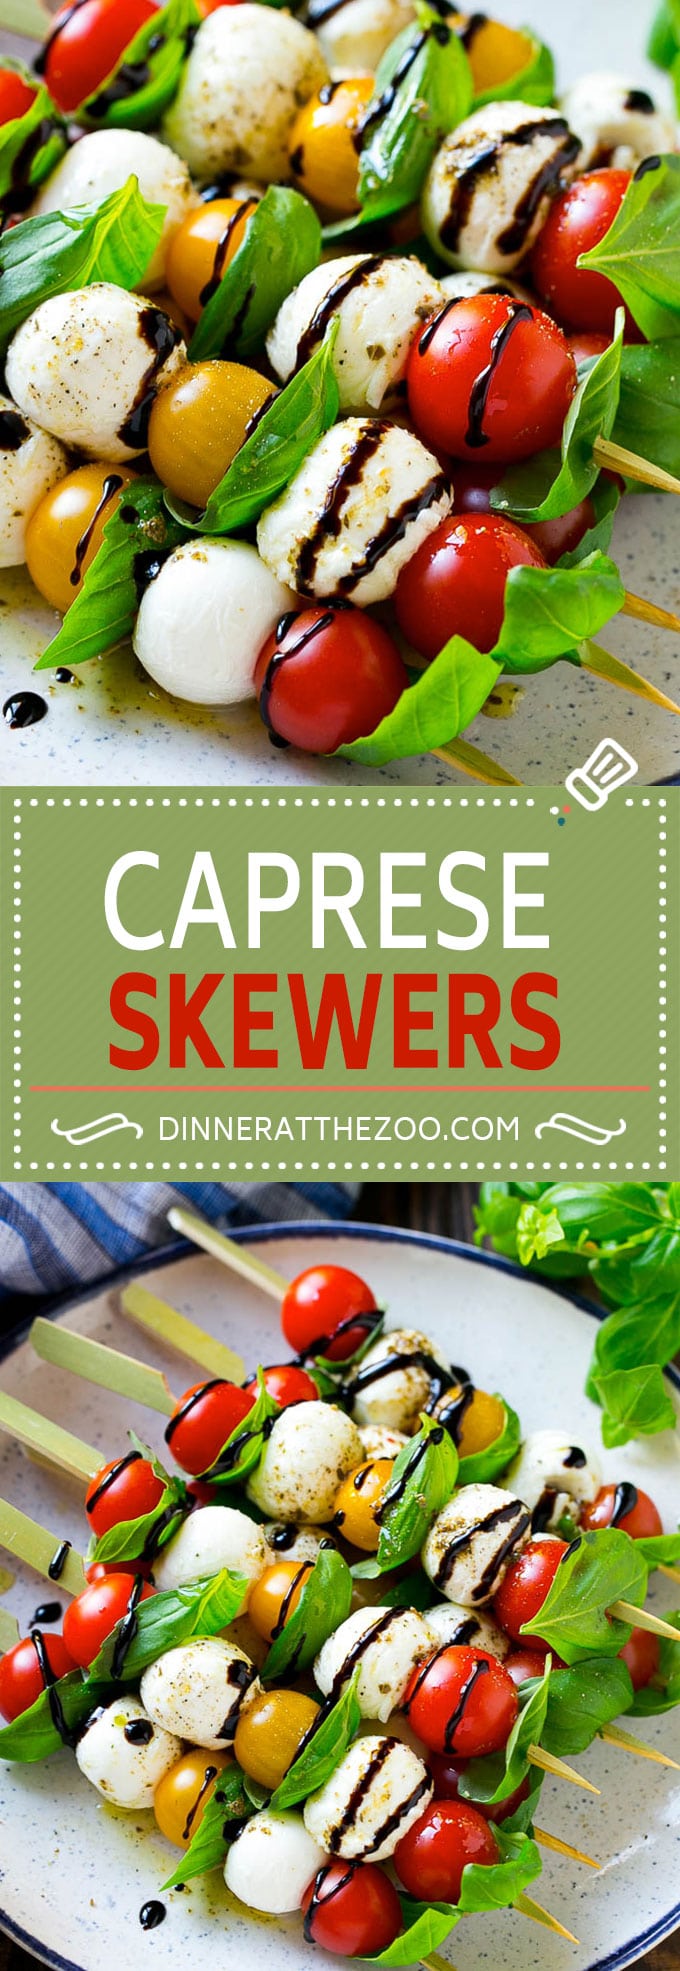 Caprese Skewers | Caprese Kabobs | Caprese Appetizer #tomato #mozzarella #basil #caprese #appetizer #dinneratthezoo